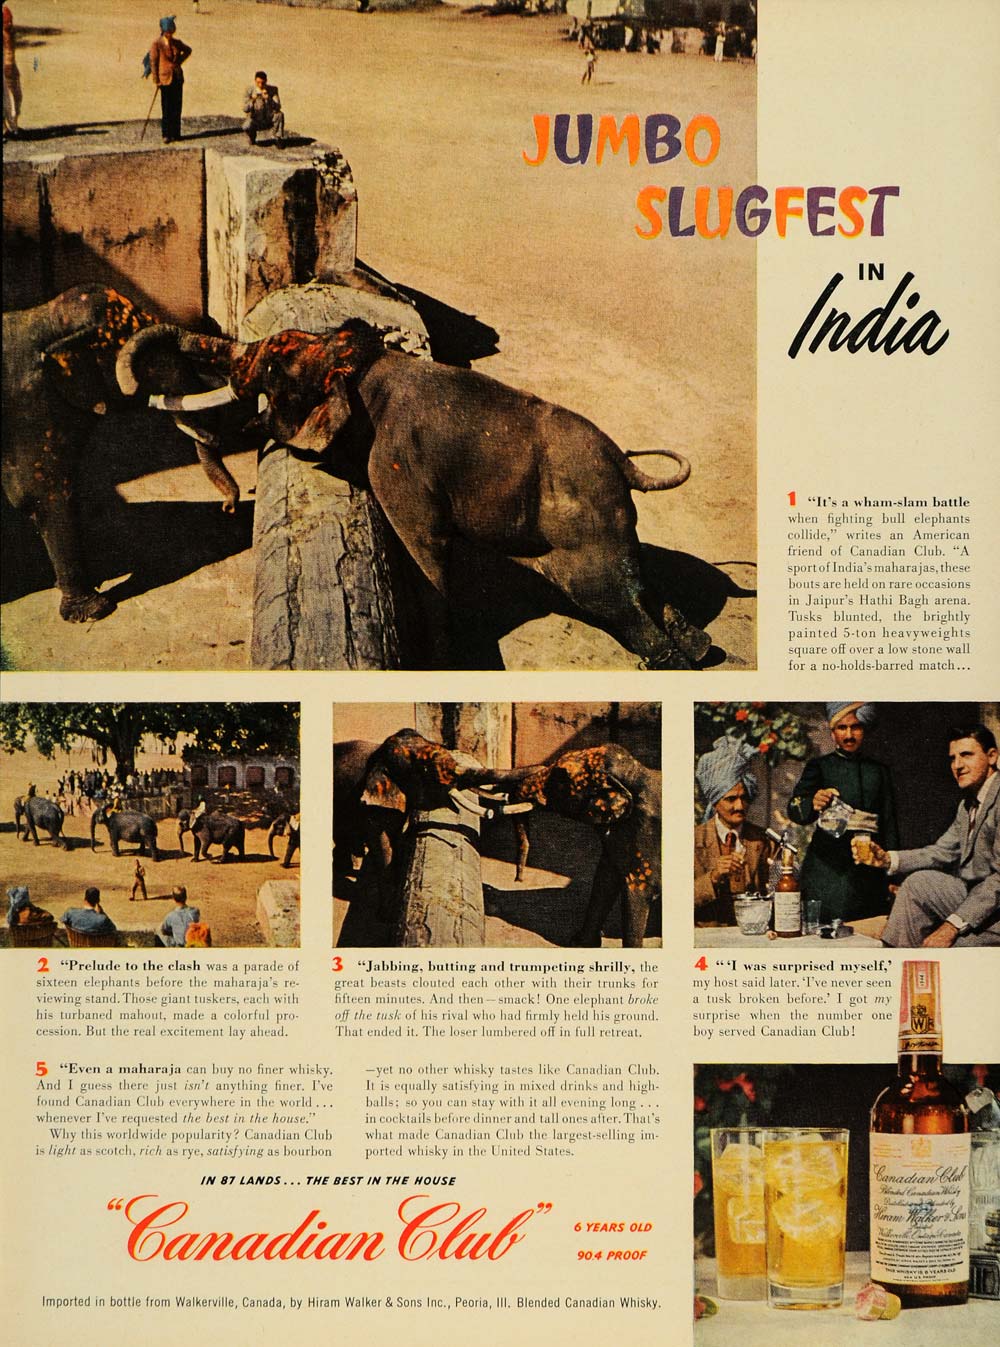 1950 Ad Jaipur Bull Elephant Fight Canadian Club Whisky - ORIGINAL TM5